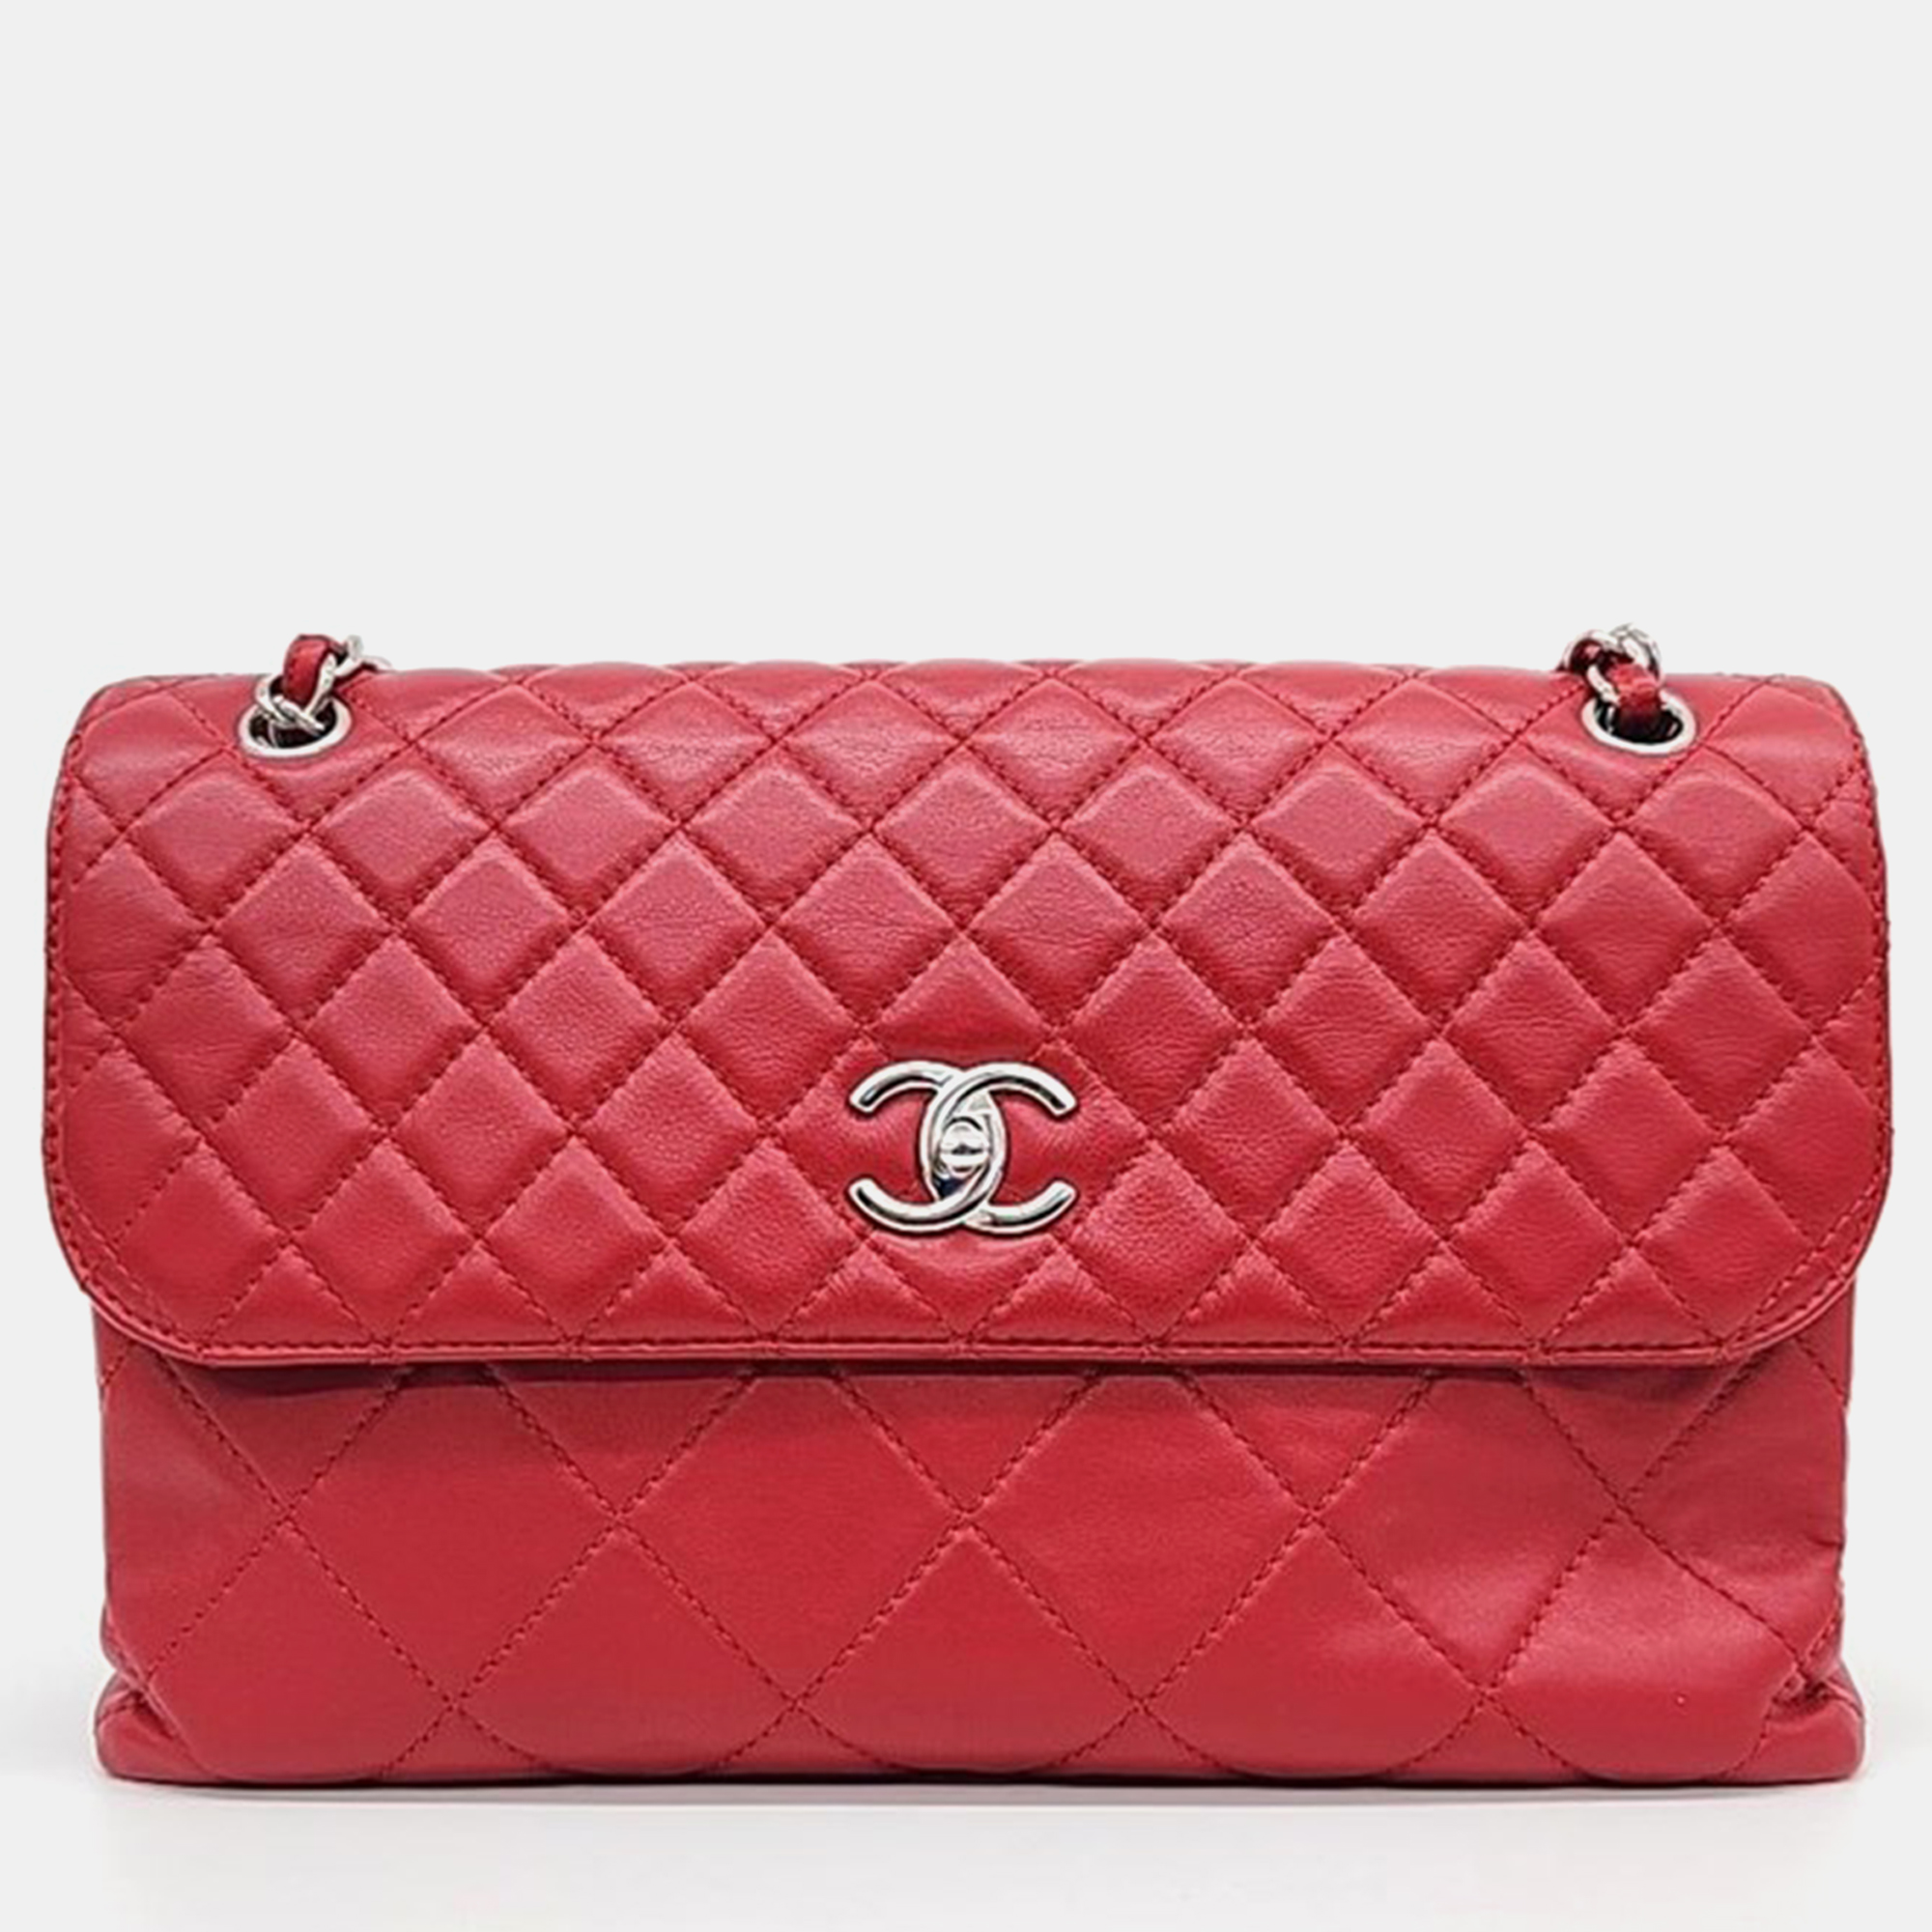 Chanel business flap bag